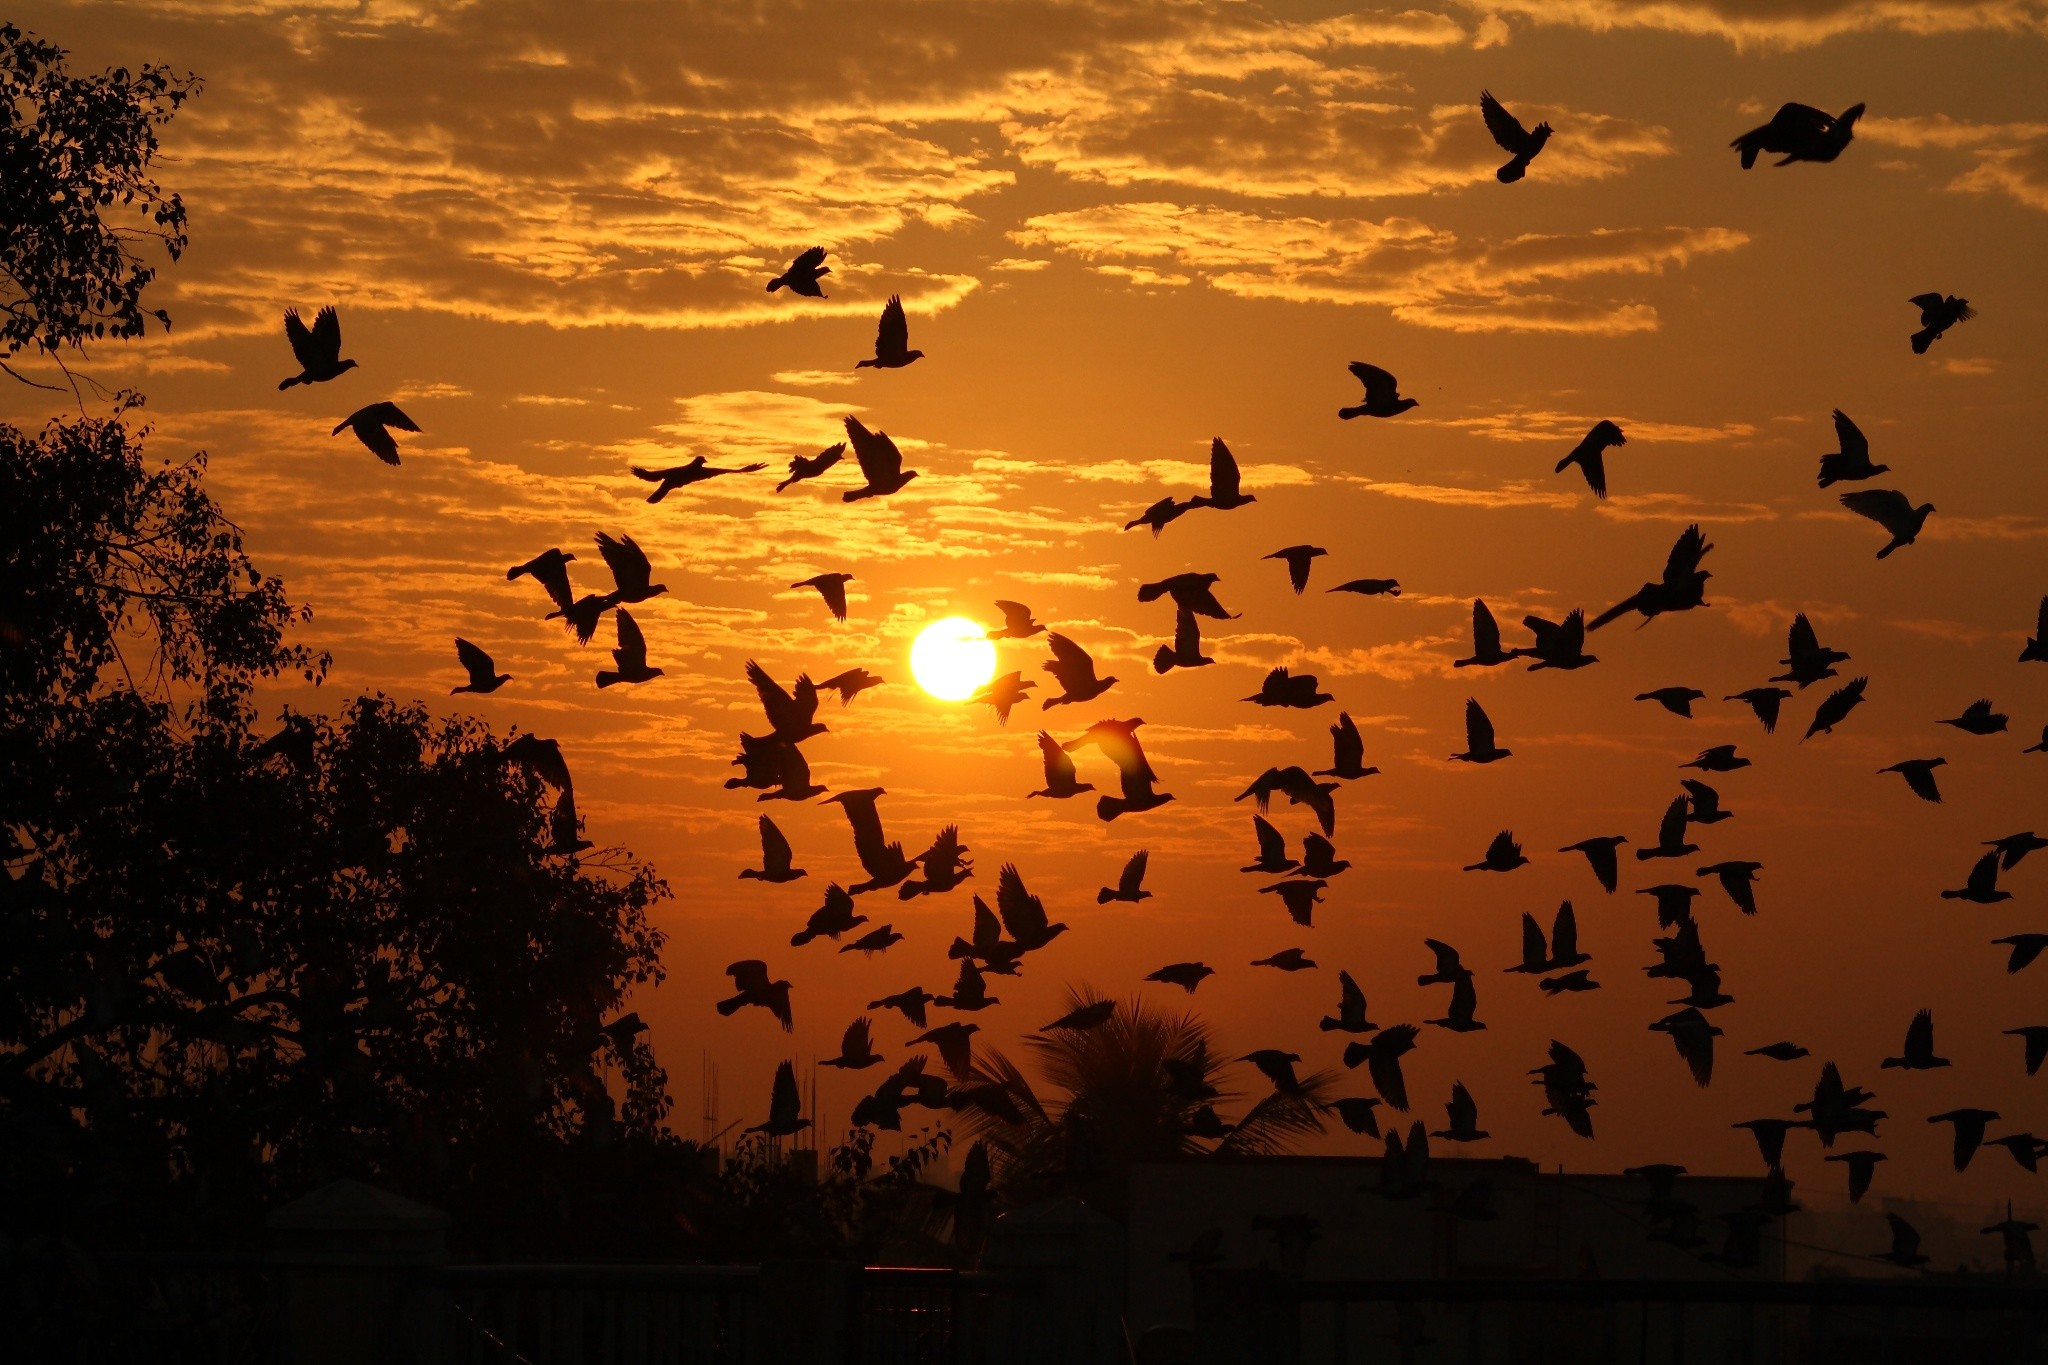 General 2048x1365 birds animals Sun flying orange sky dark silhouette sky sunlight outdoors low light